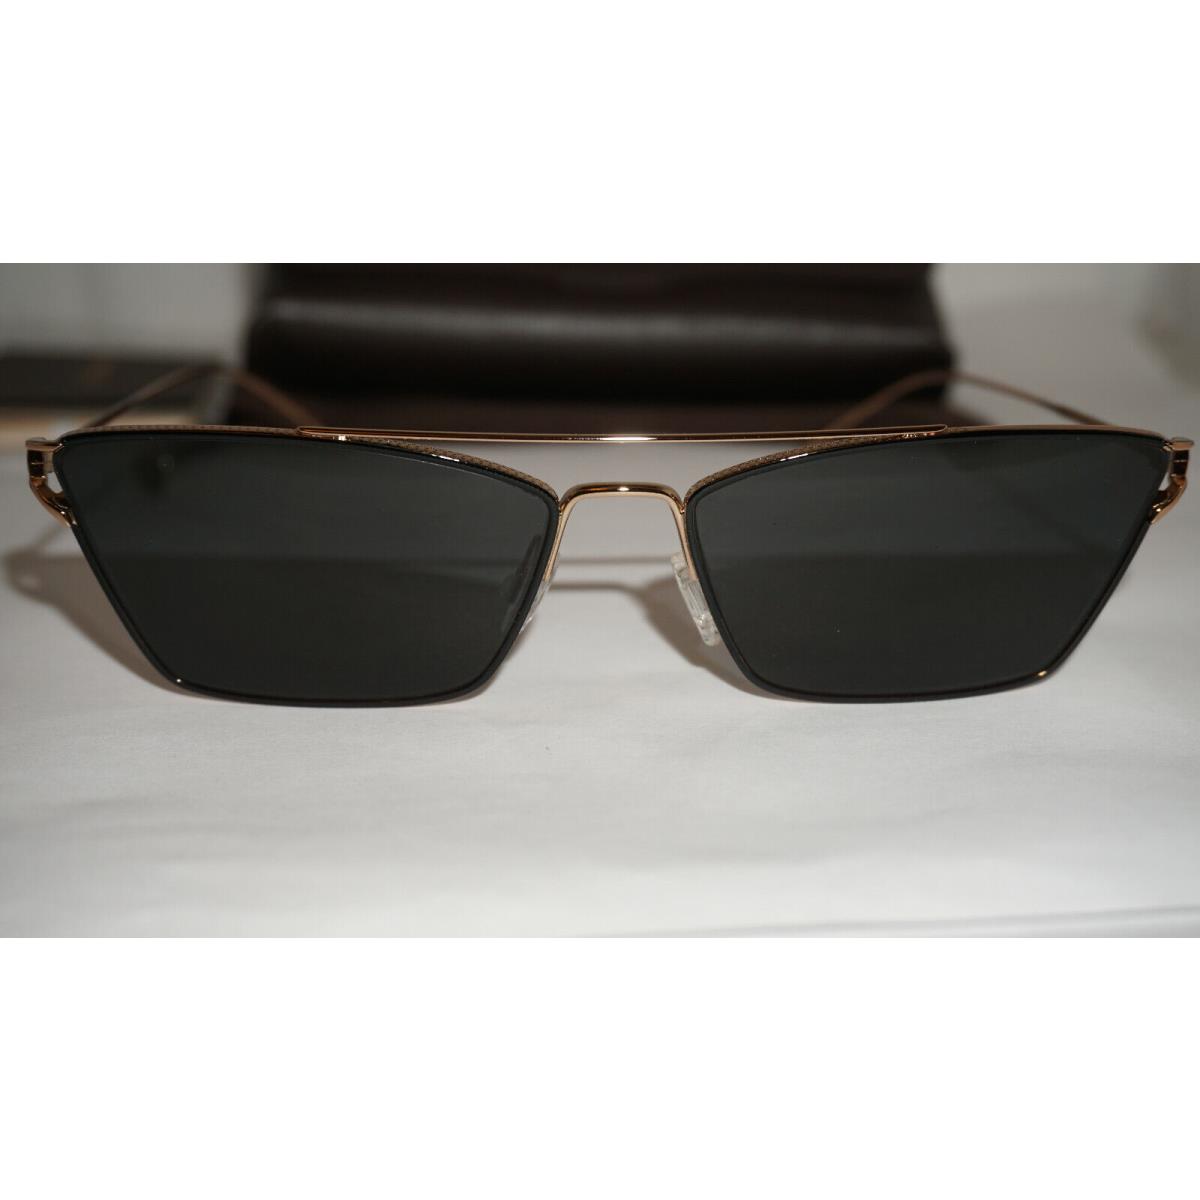 Oliver Peoples sunglasses  - Gold Frame, Gray Lens 1